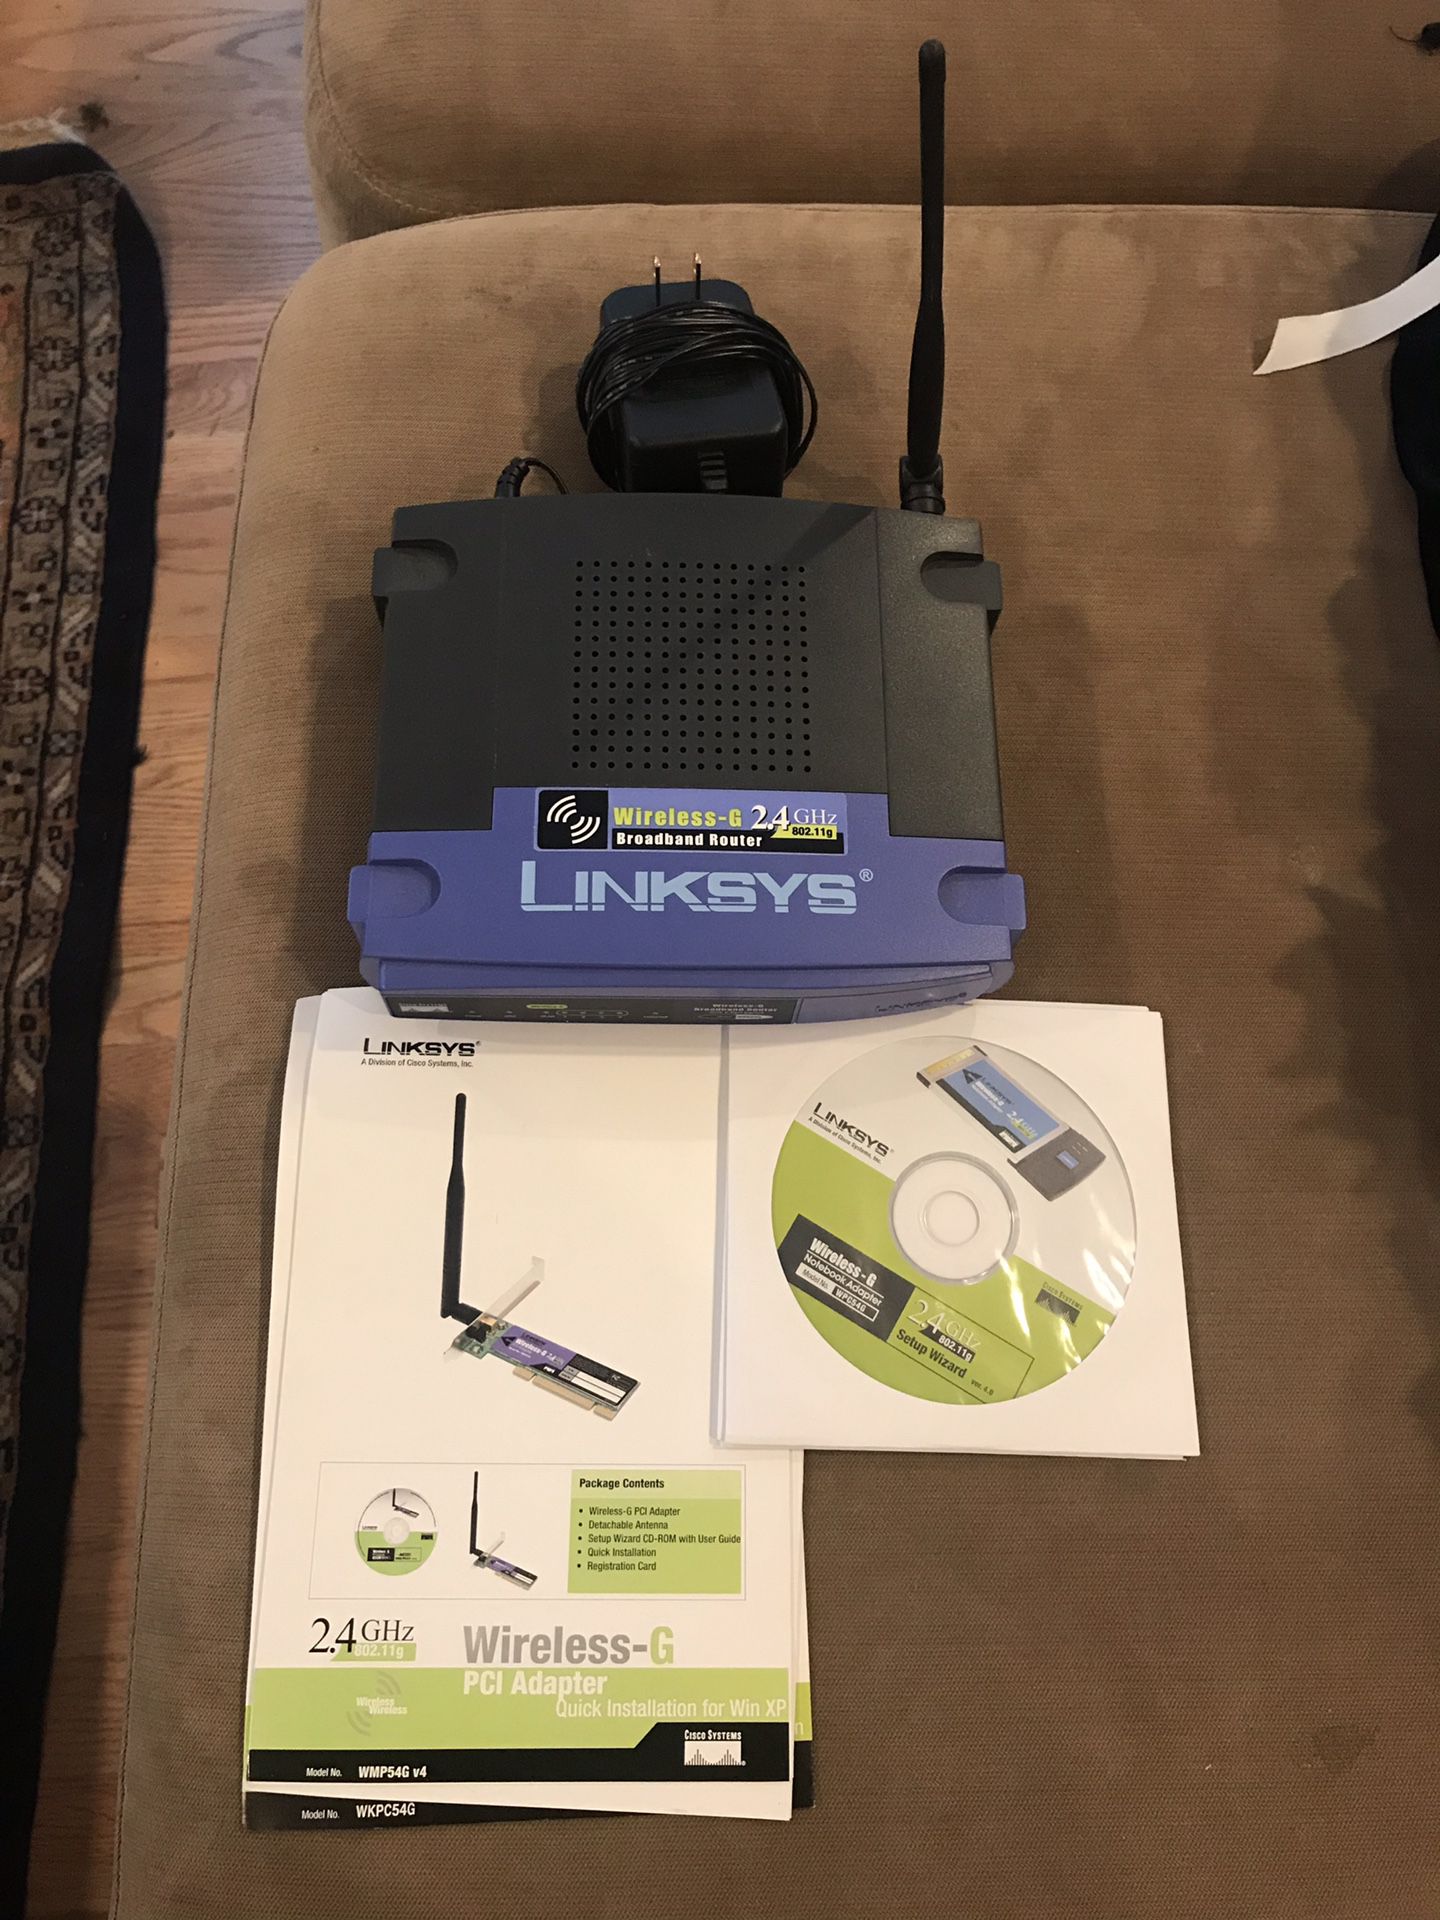 Linksys WRK54G Wireless-G Broadband router